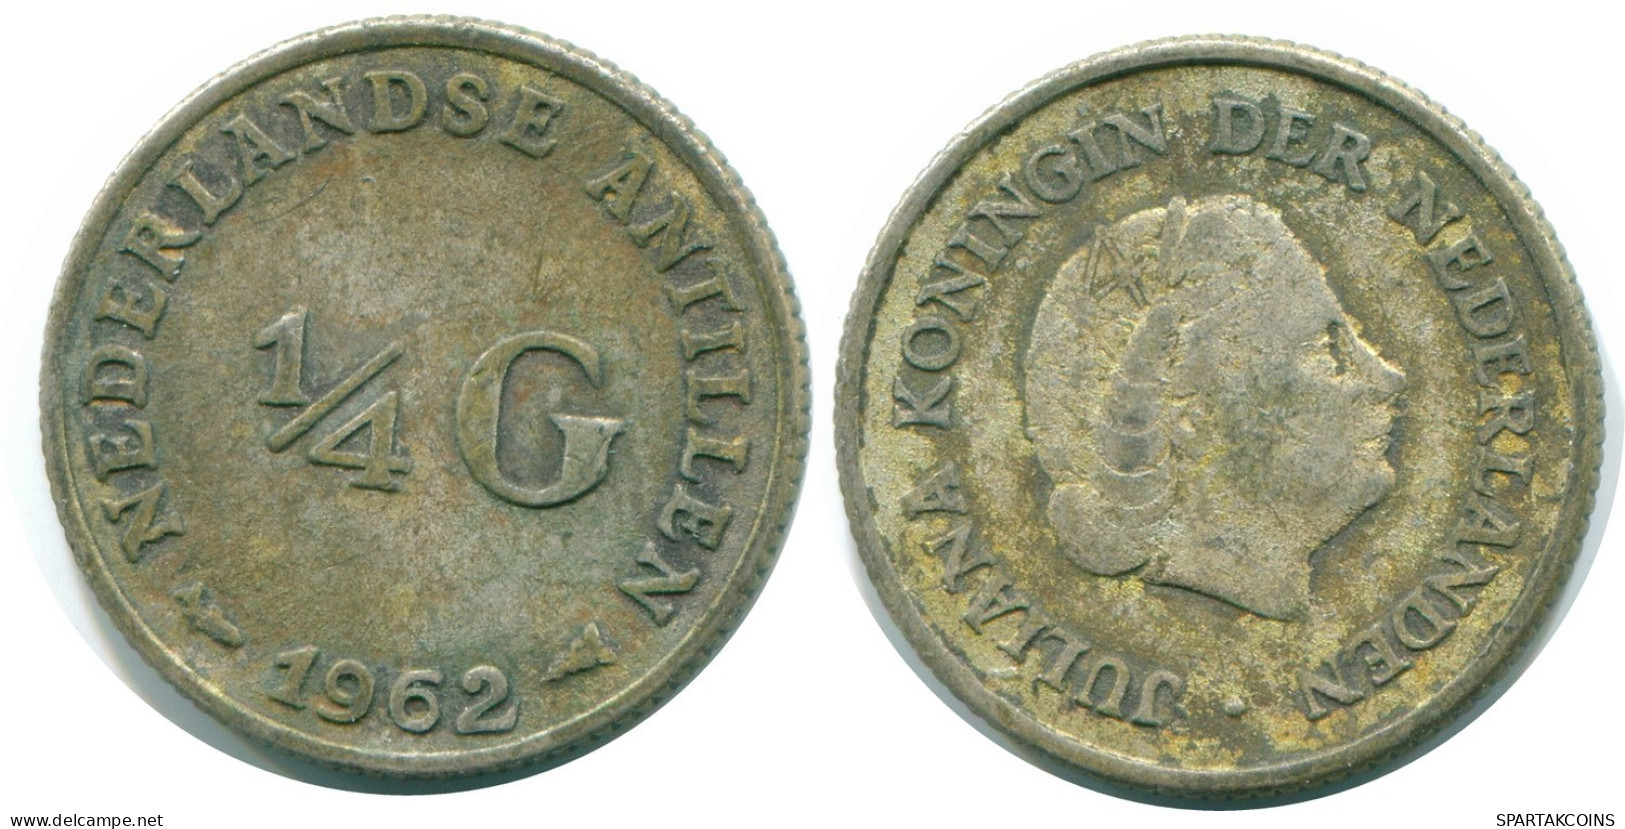 1/4 GULDEN 1962 NETHERLANDS ANTILLES SILVER Colonial Coin #NL11134.4.U.A - Antilles Néerlandaises